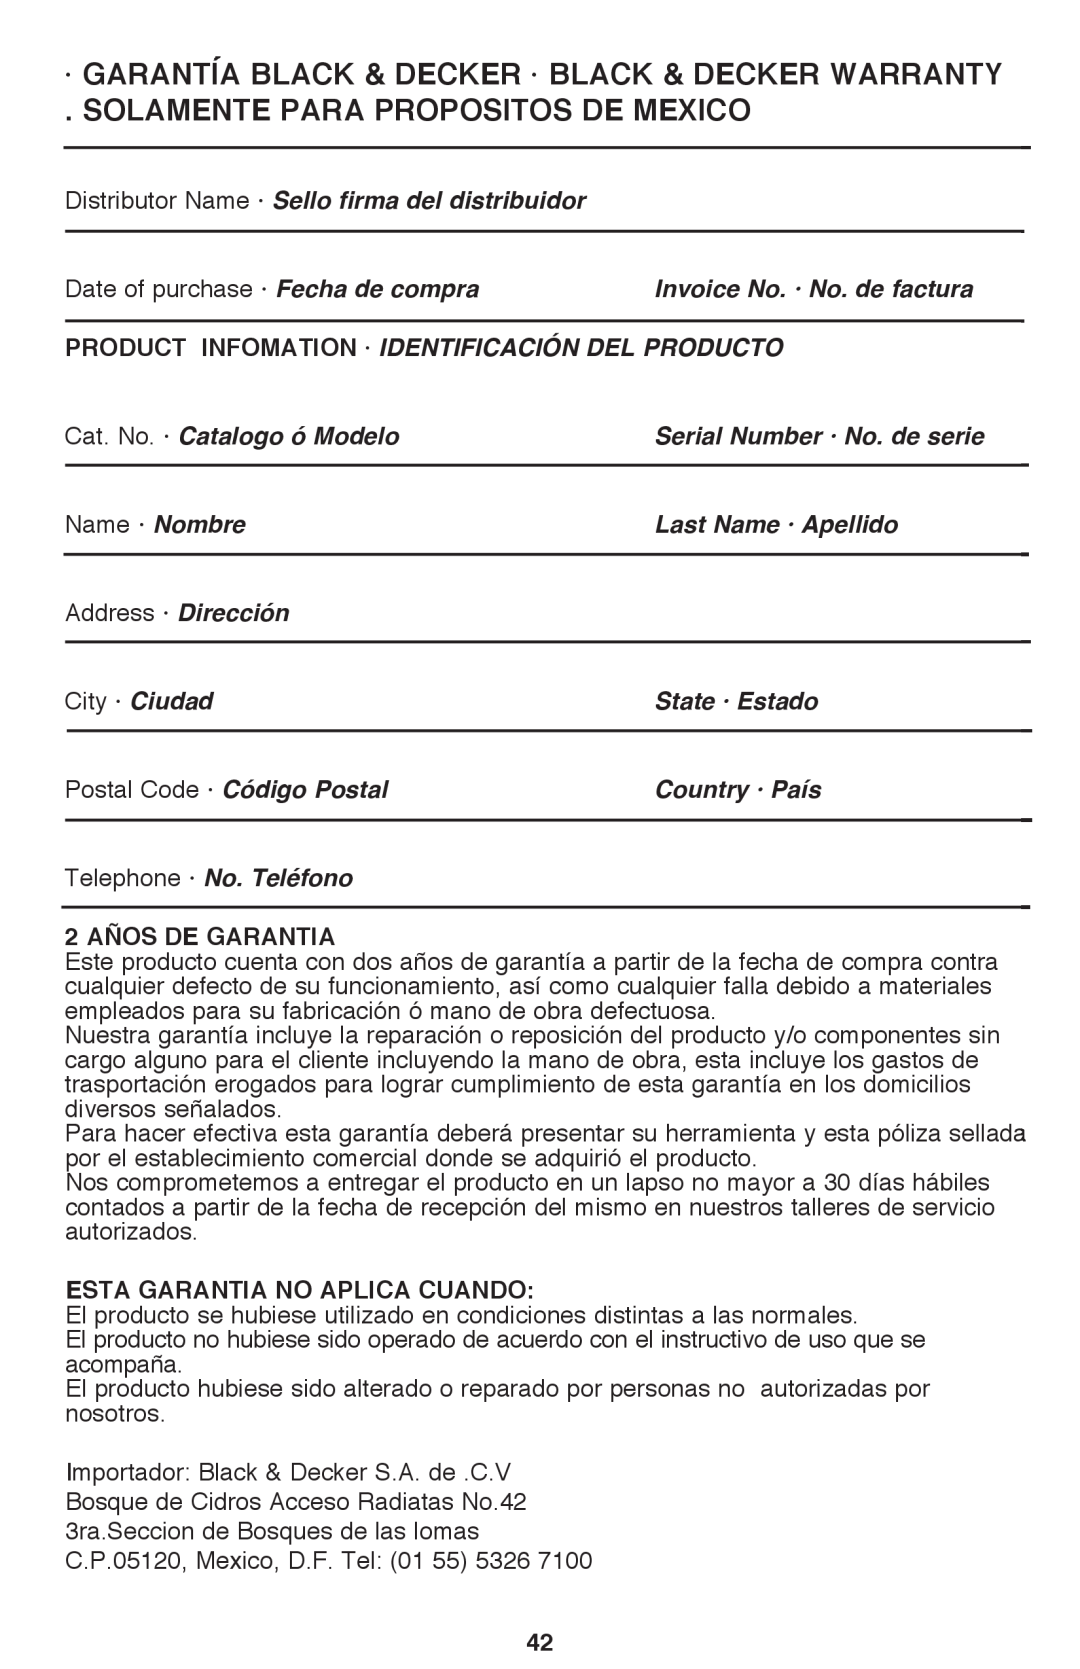 Black & Decker PSL12 · Garantía Black & Decker · Black & Decker Warranty, Solamente Para Propositos De Mexico 